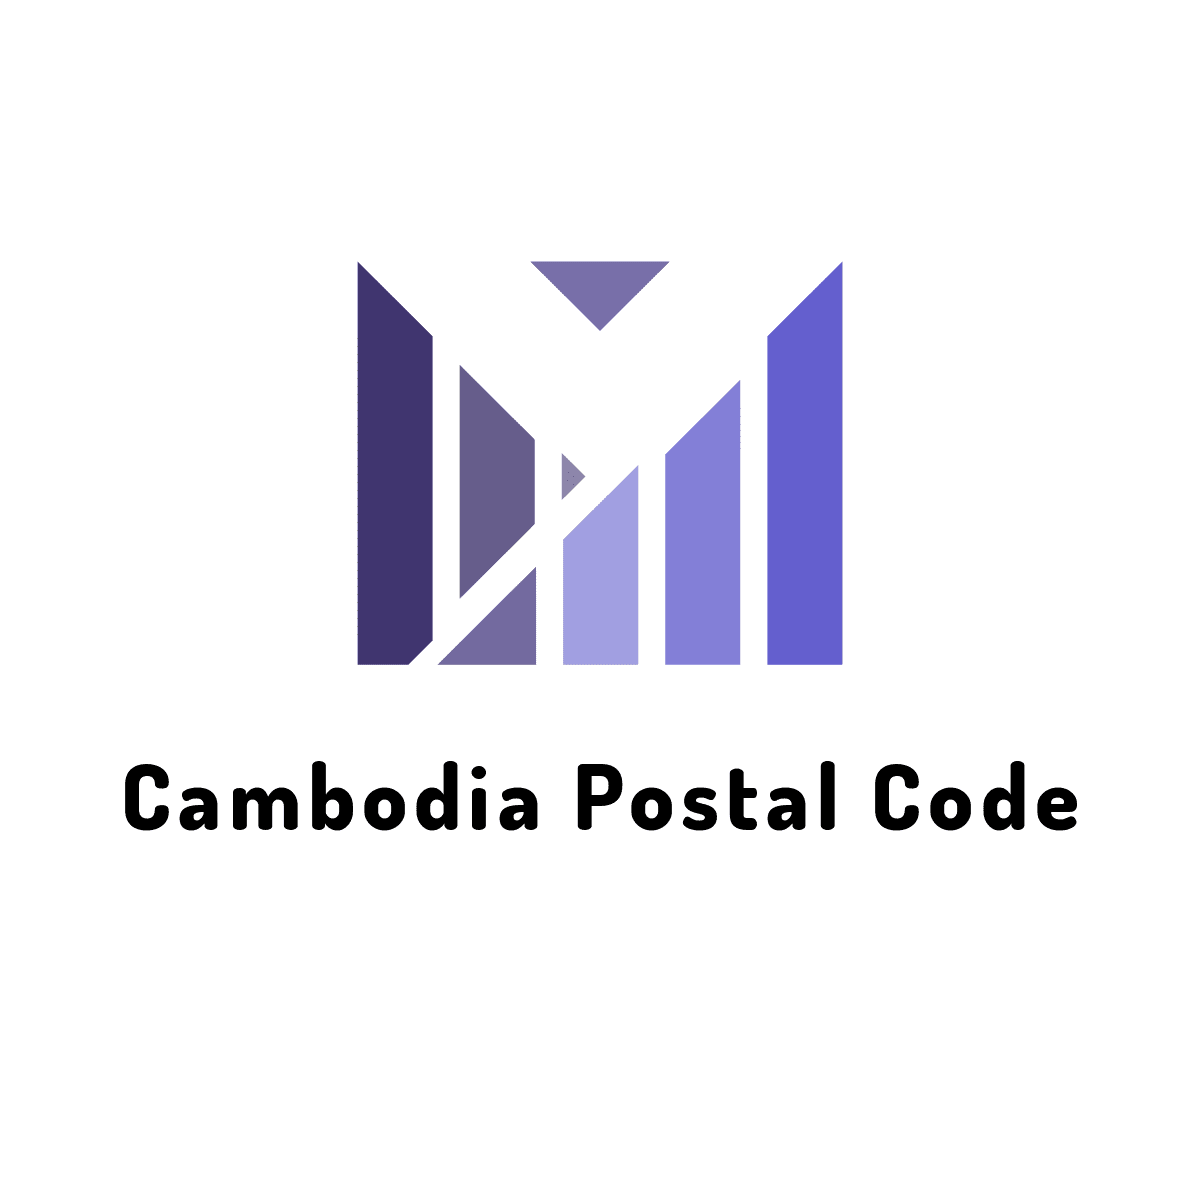 Cambodia Postal Code logo